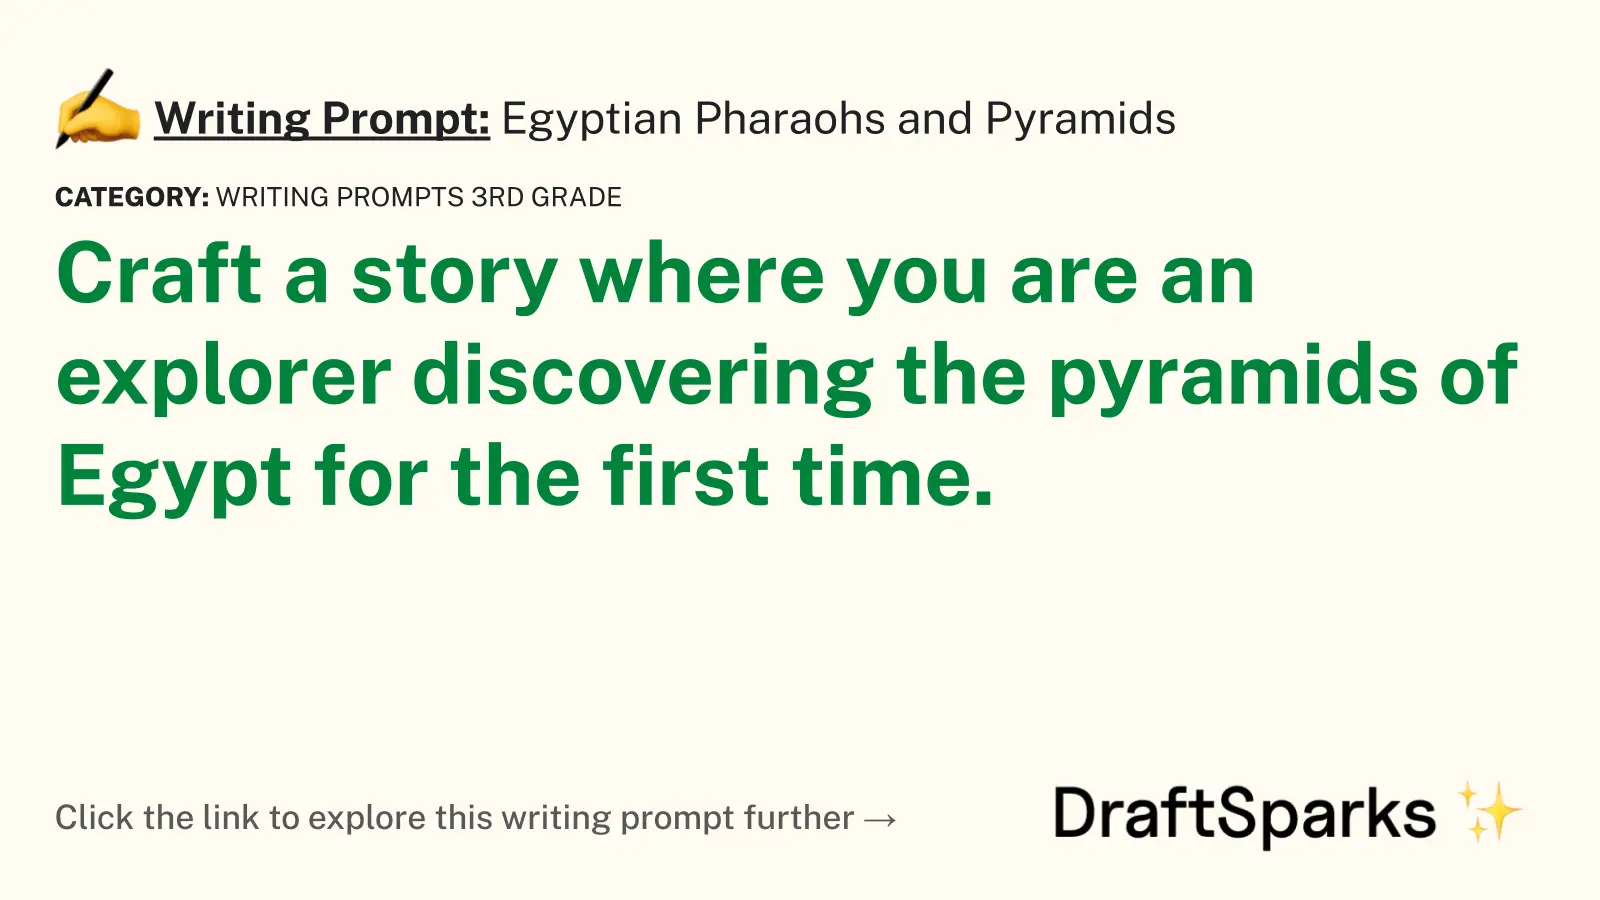 Egyptian Pharaohs and Pyramids